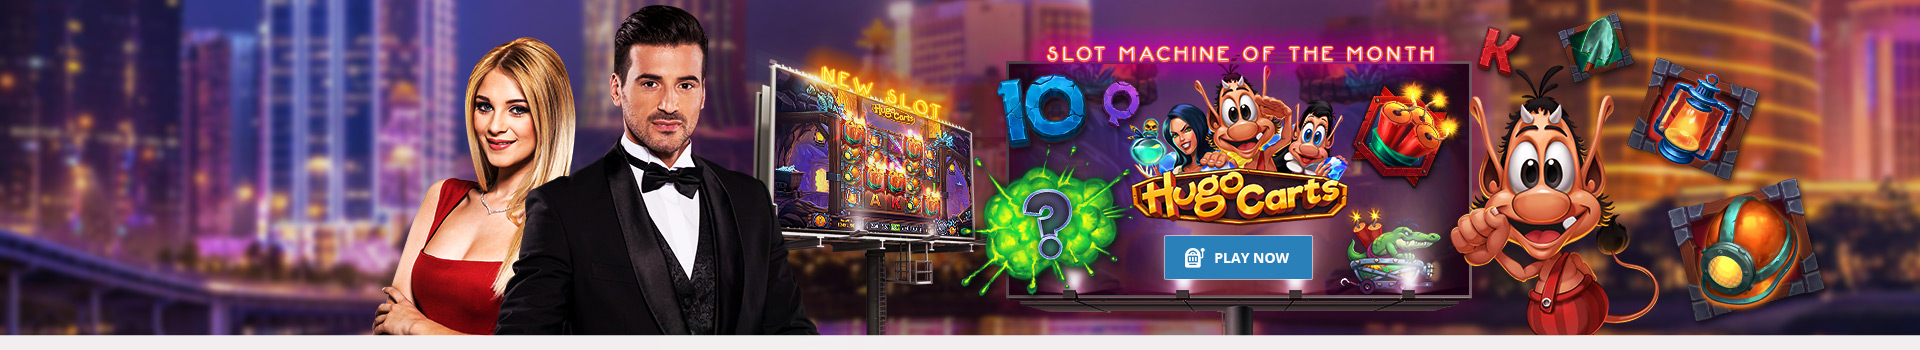 Best online slot machine : Hugo Carts Play'n Go